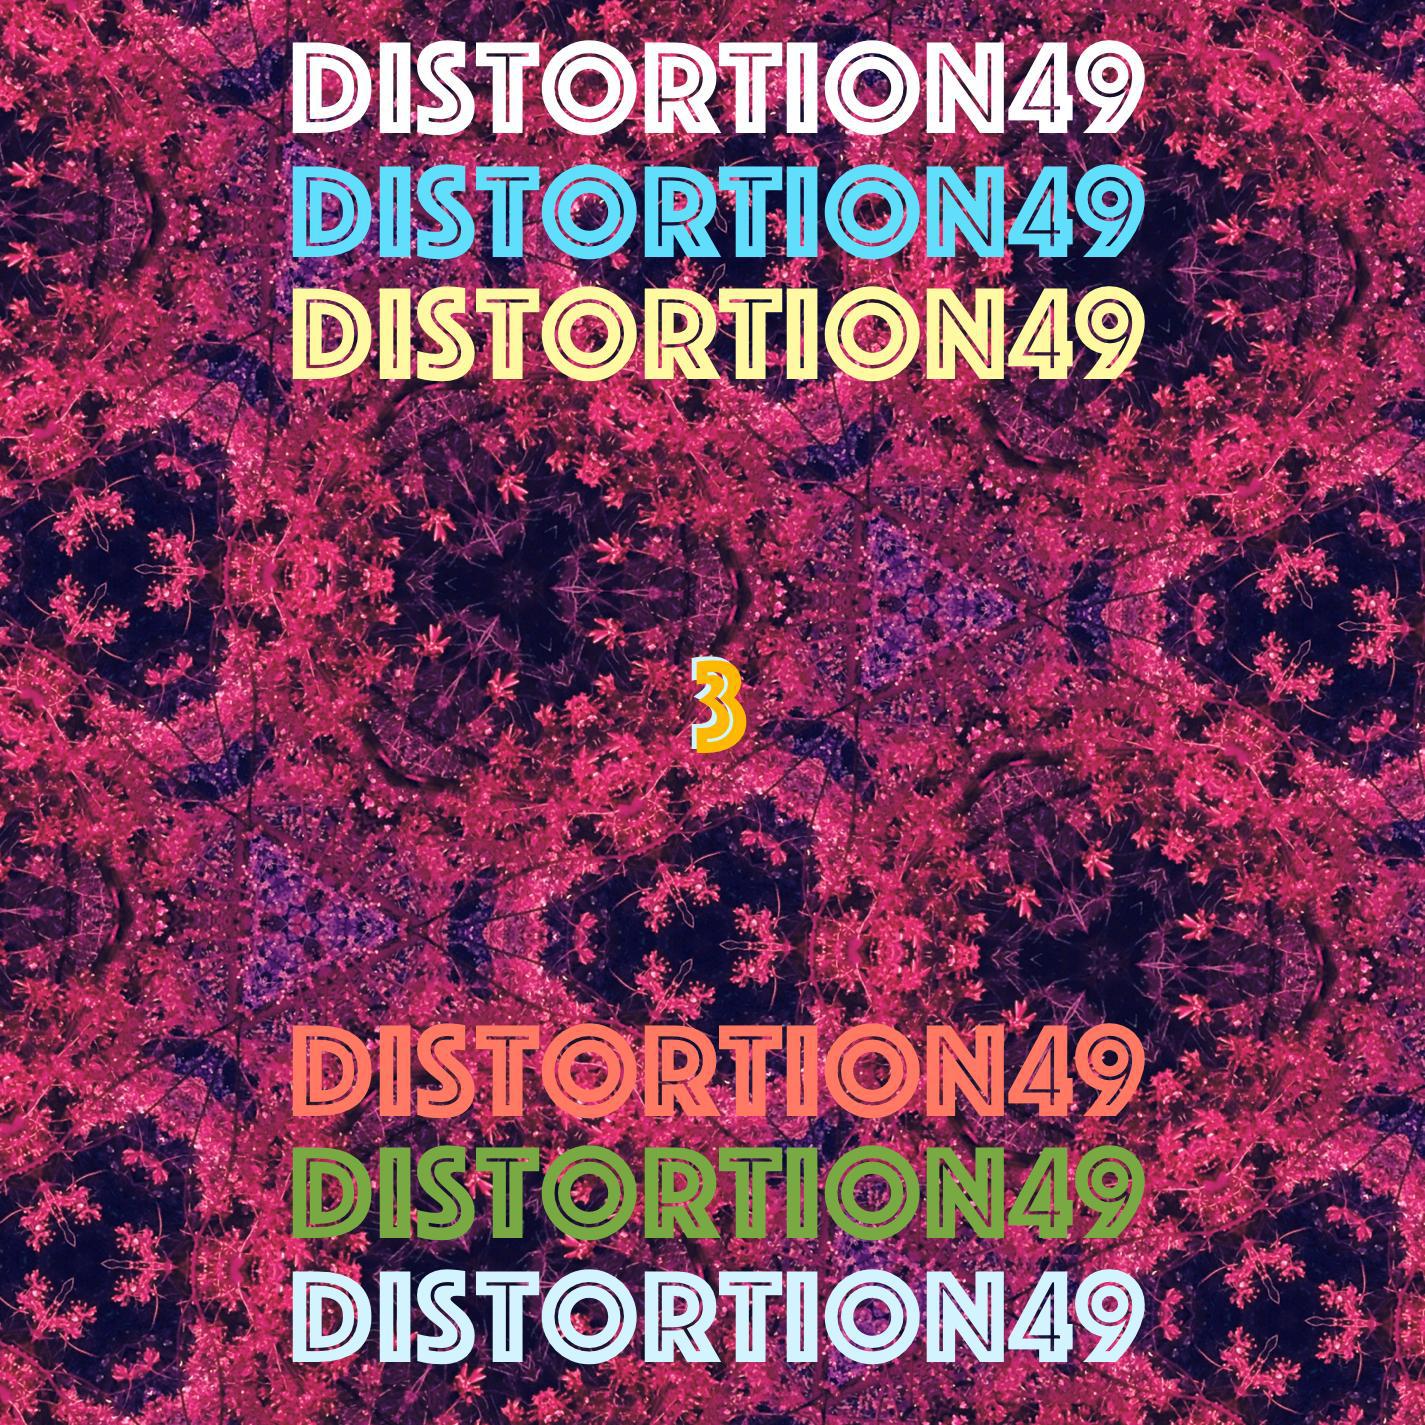 Distortion49 - It's OK